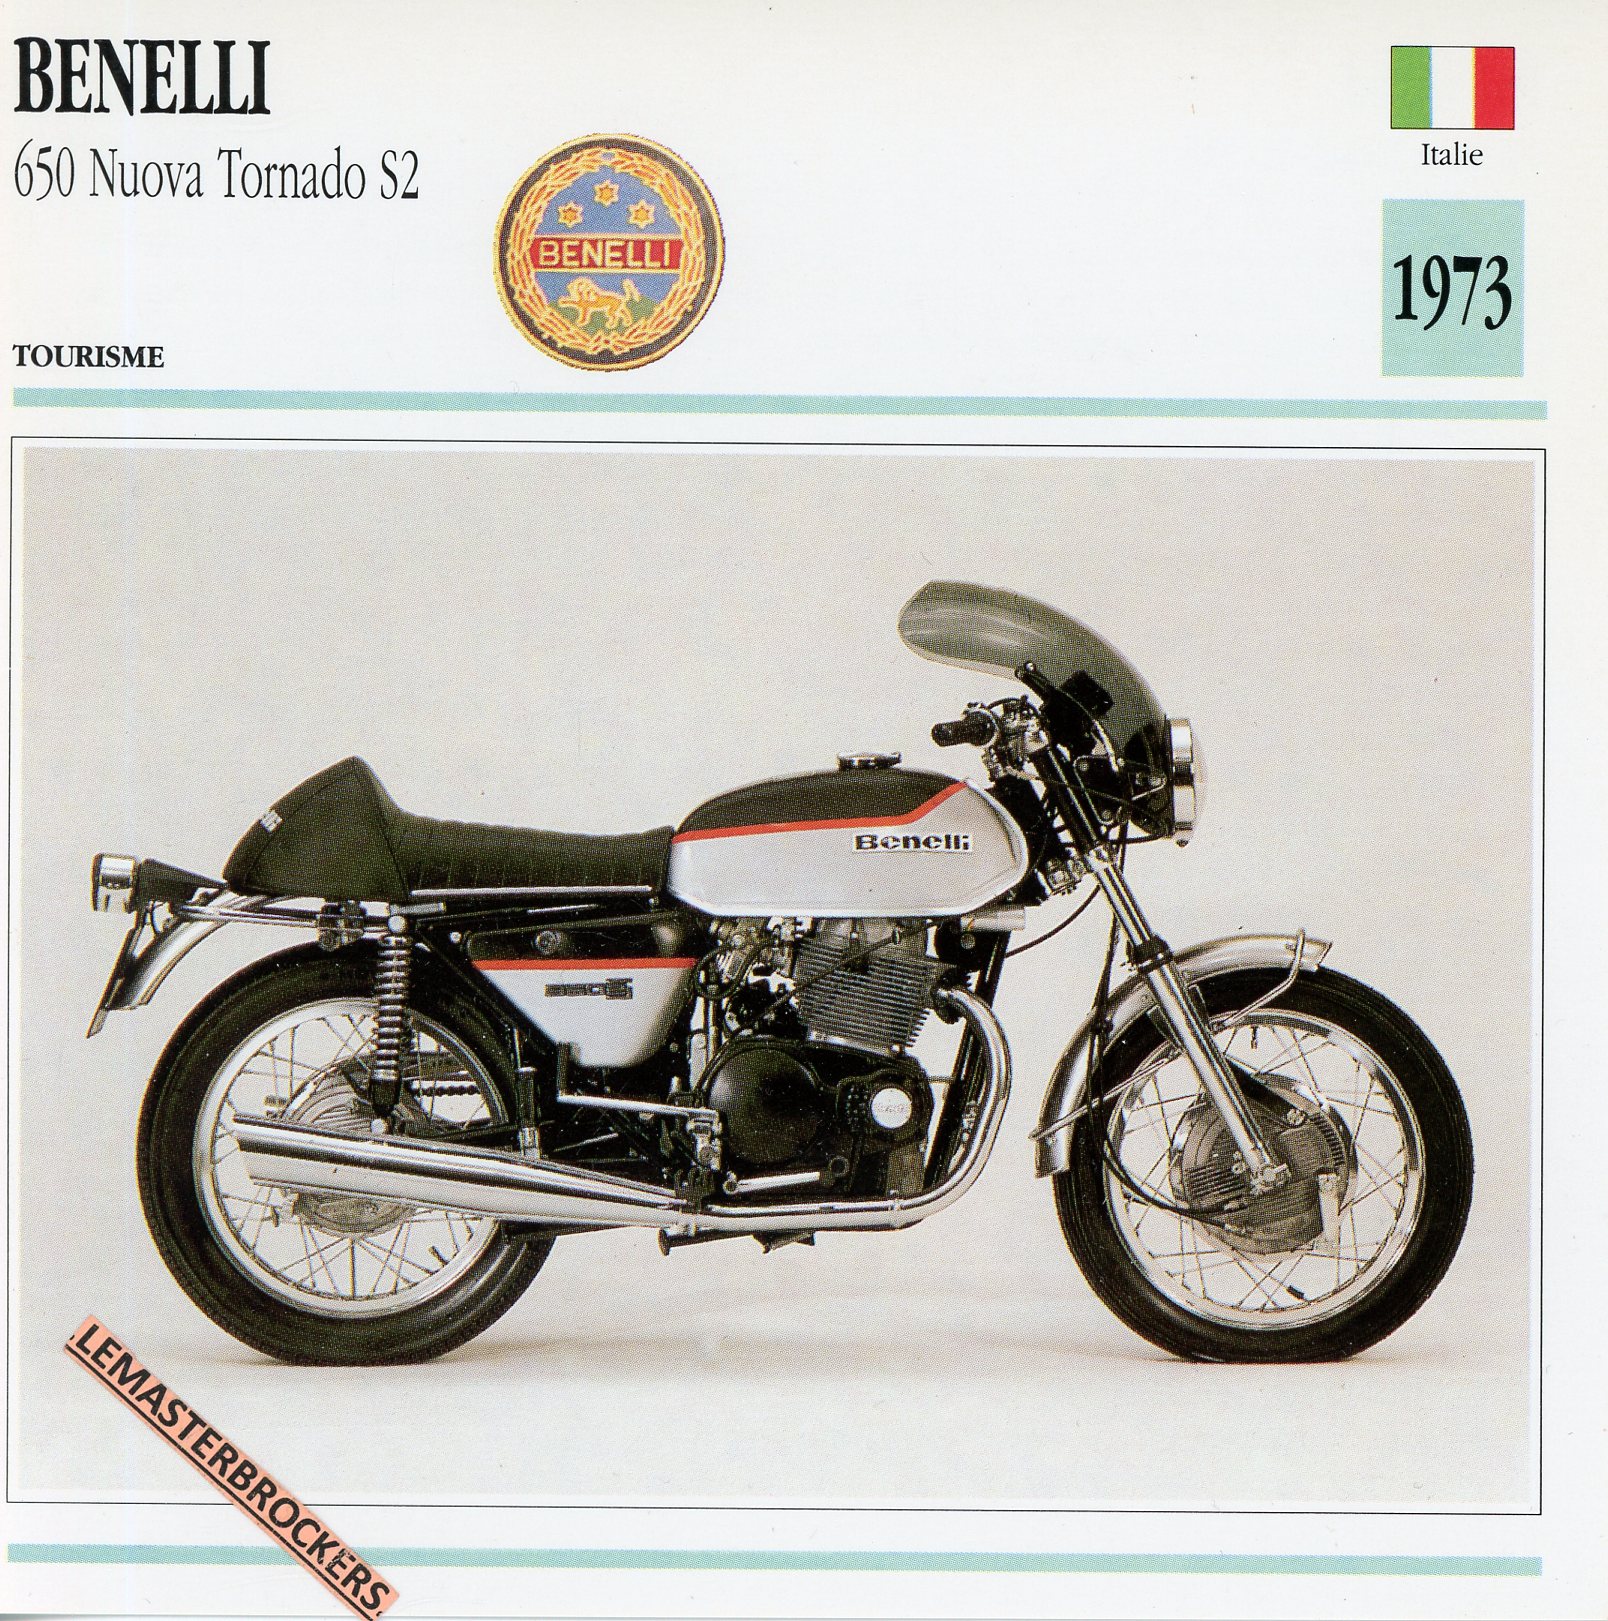 BENELLI-650-NUOVA-TORNADO-S2-1973-LEMASTERBROCKERS-FICHE-MOTO-ATLAS-CARD